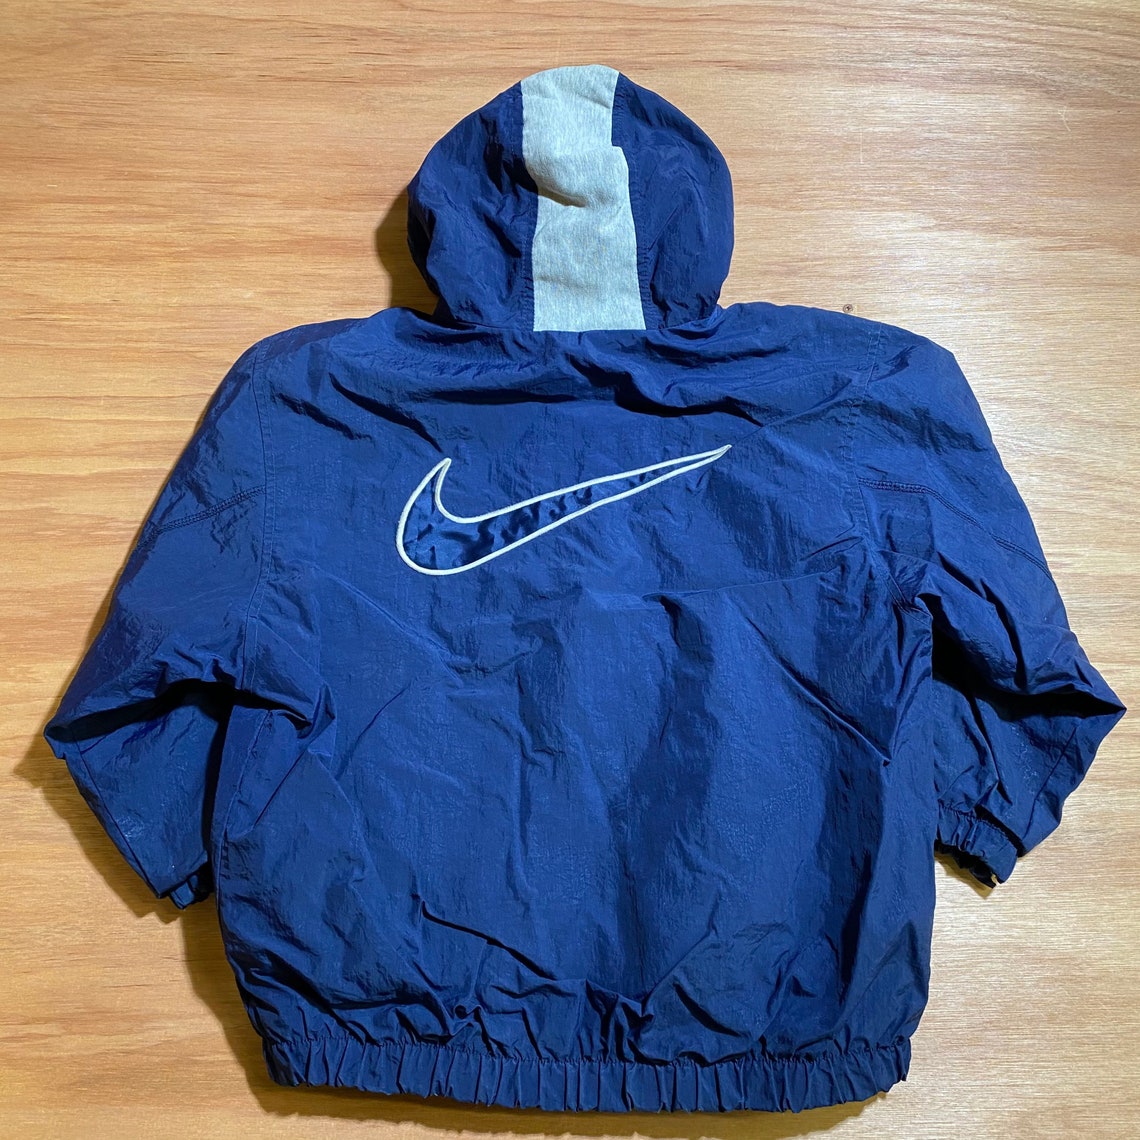 Vintage 90s Nike double sided check/swoosh Windbreaker | Etsy